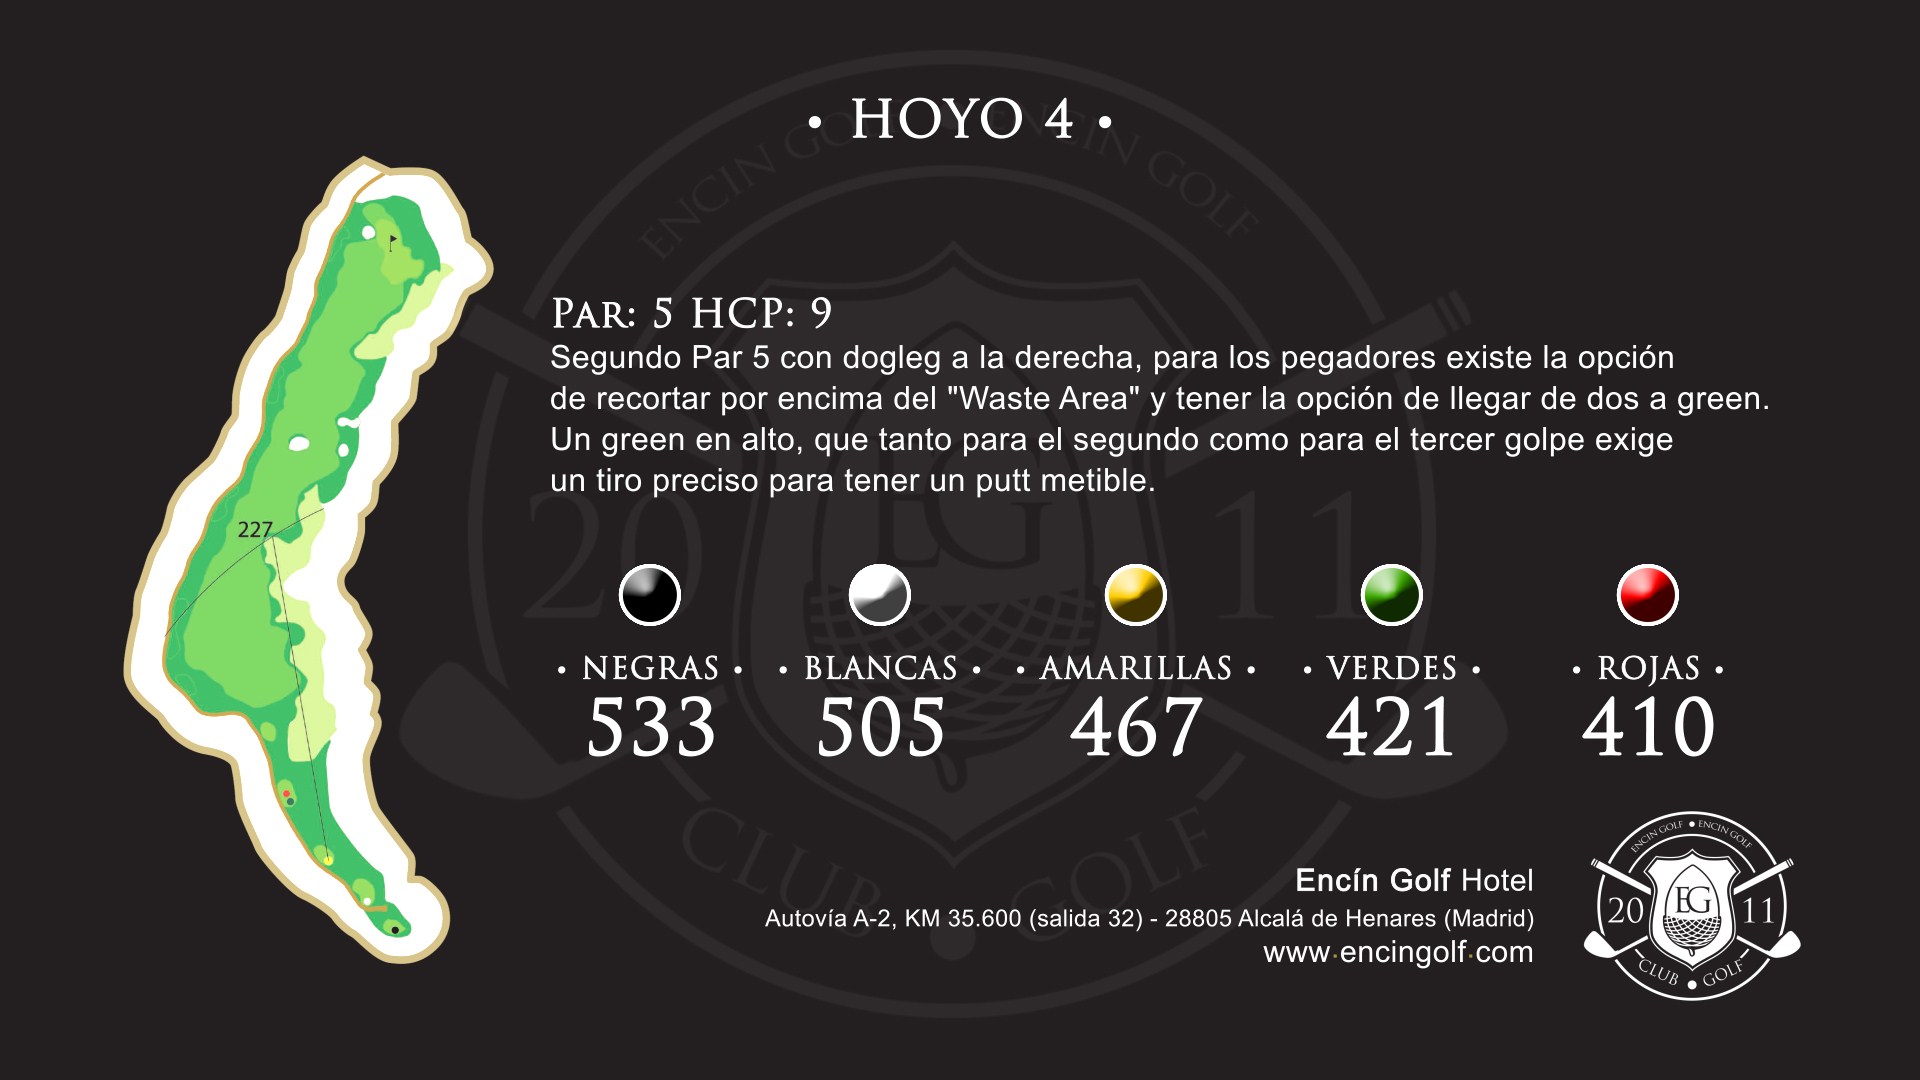 Hoyo 4 Encín Golf Hotel